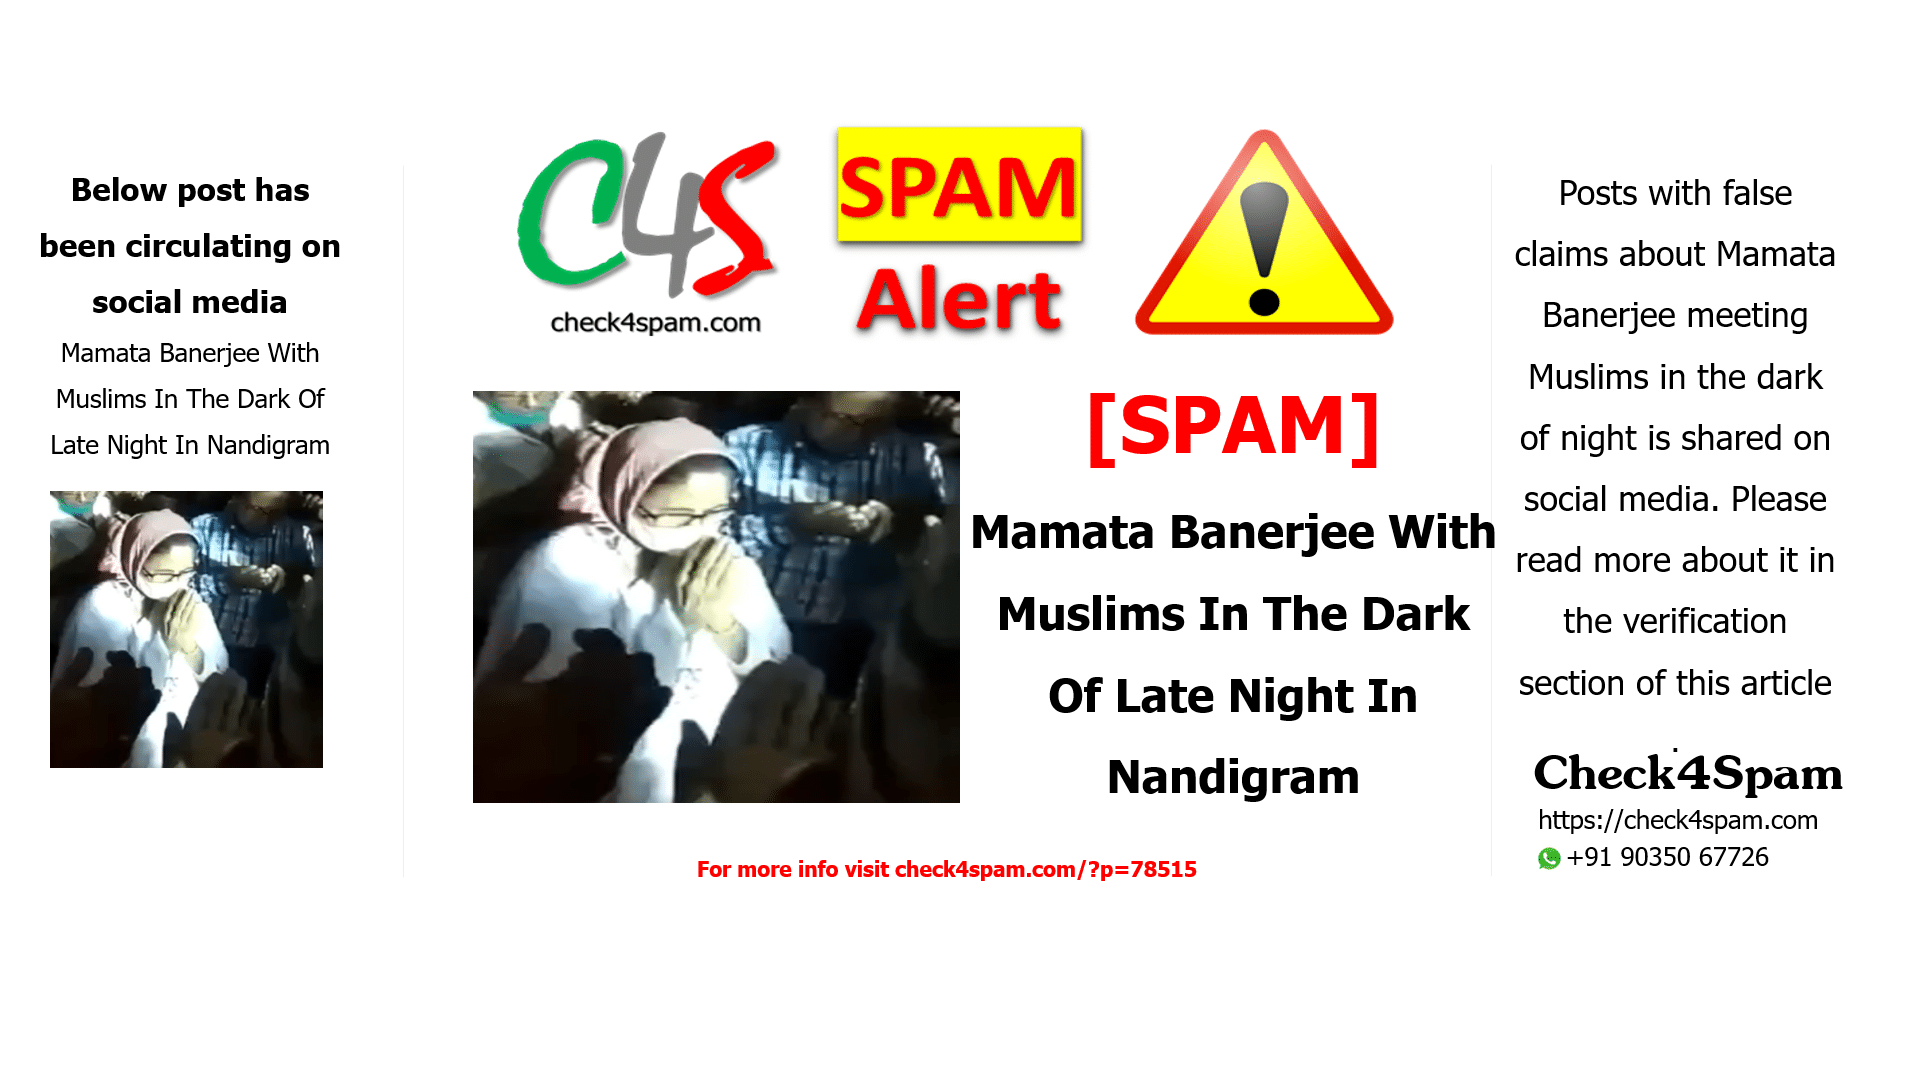 Mamata Banerjee With Muslims In The Dark Of Late Night In Nandigram